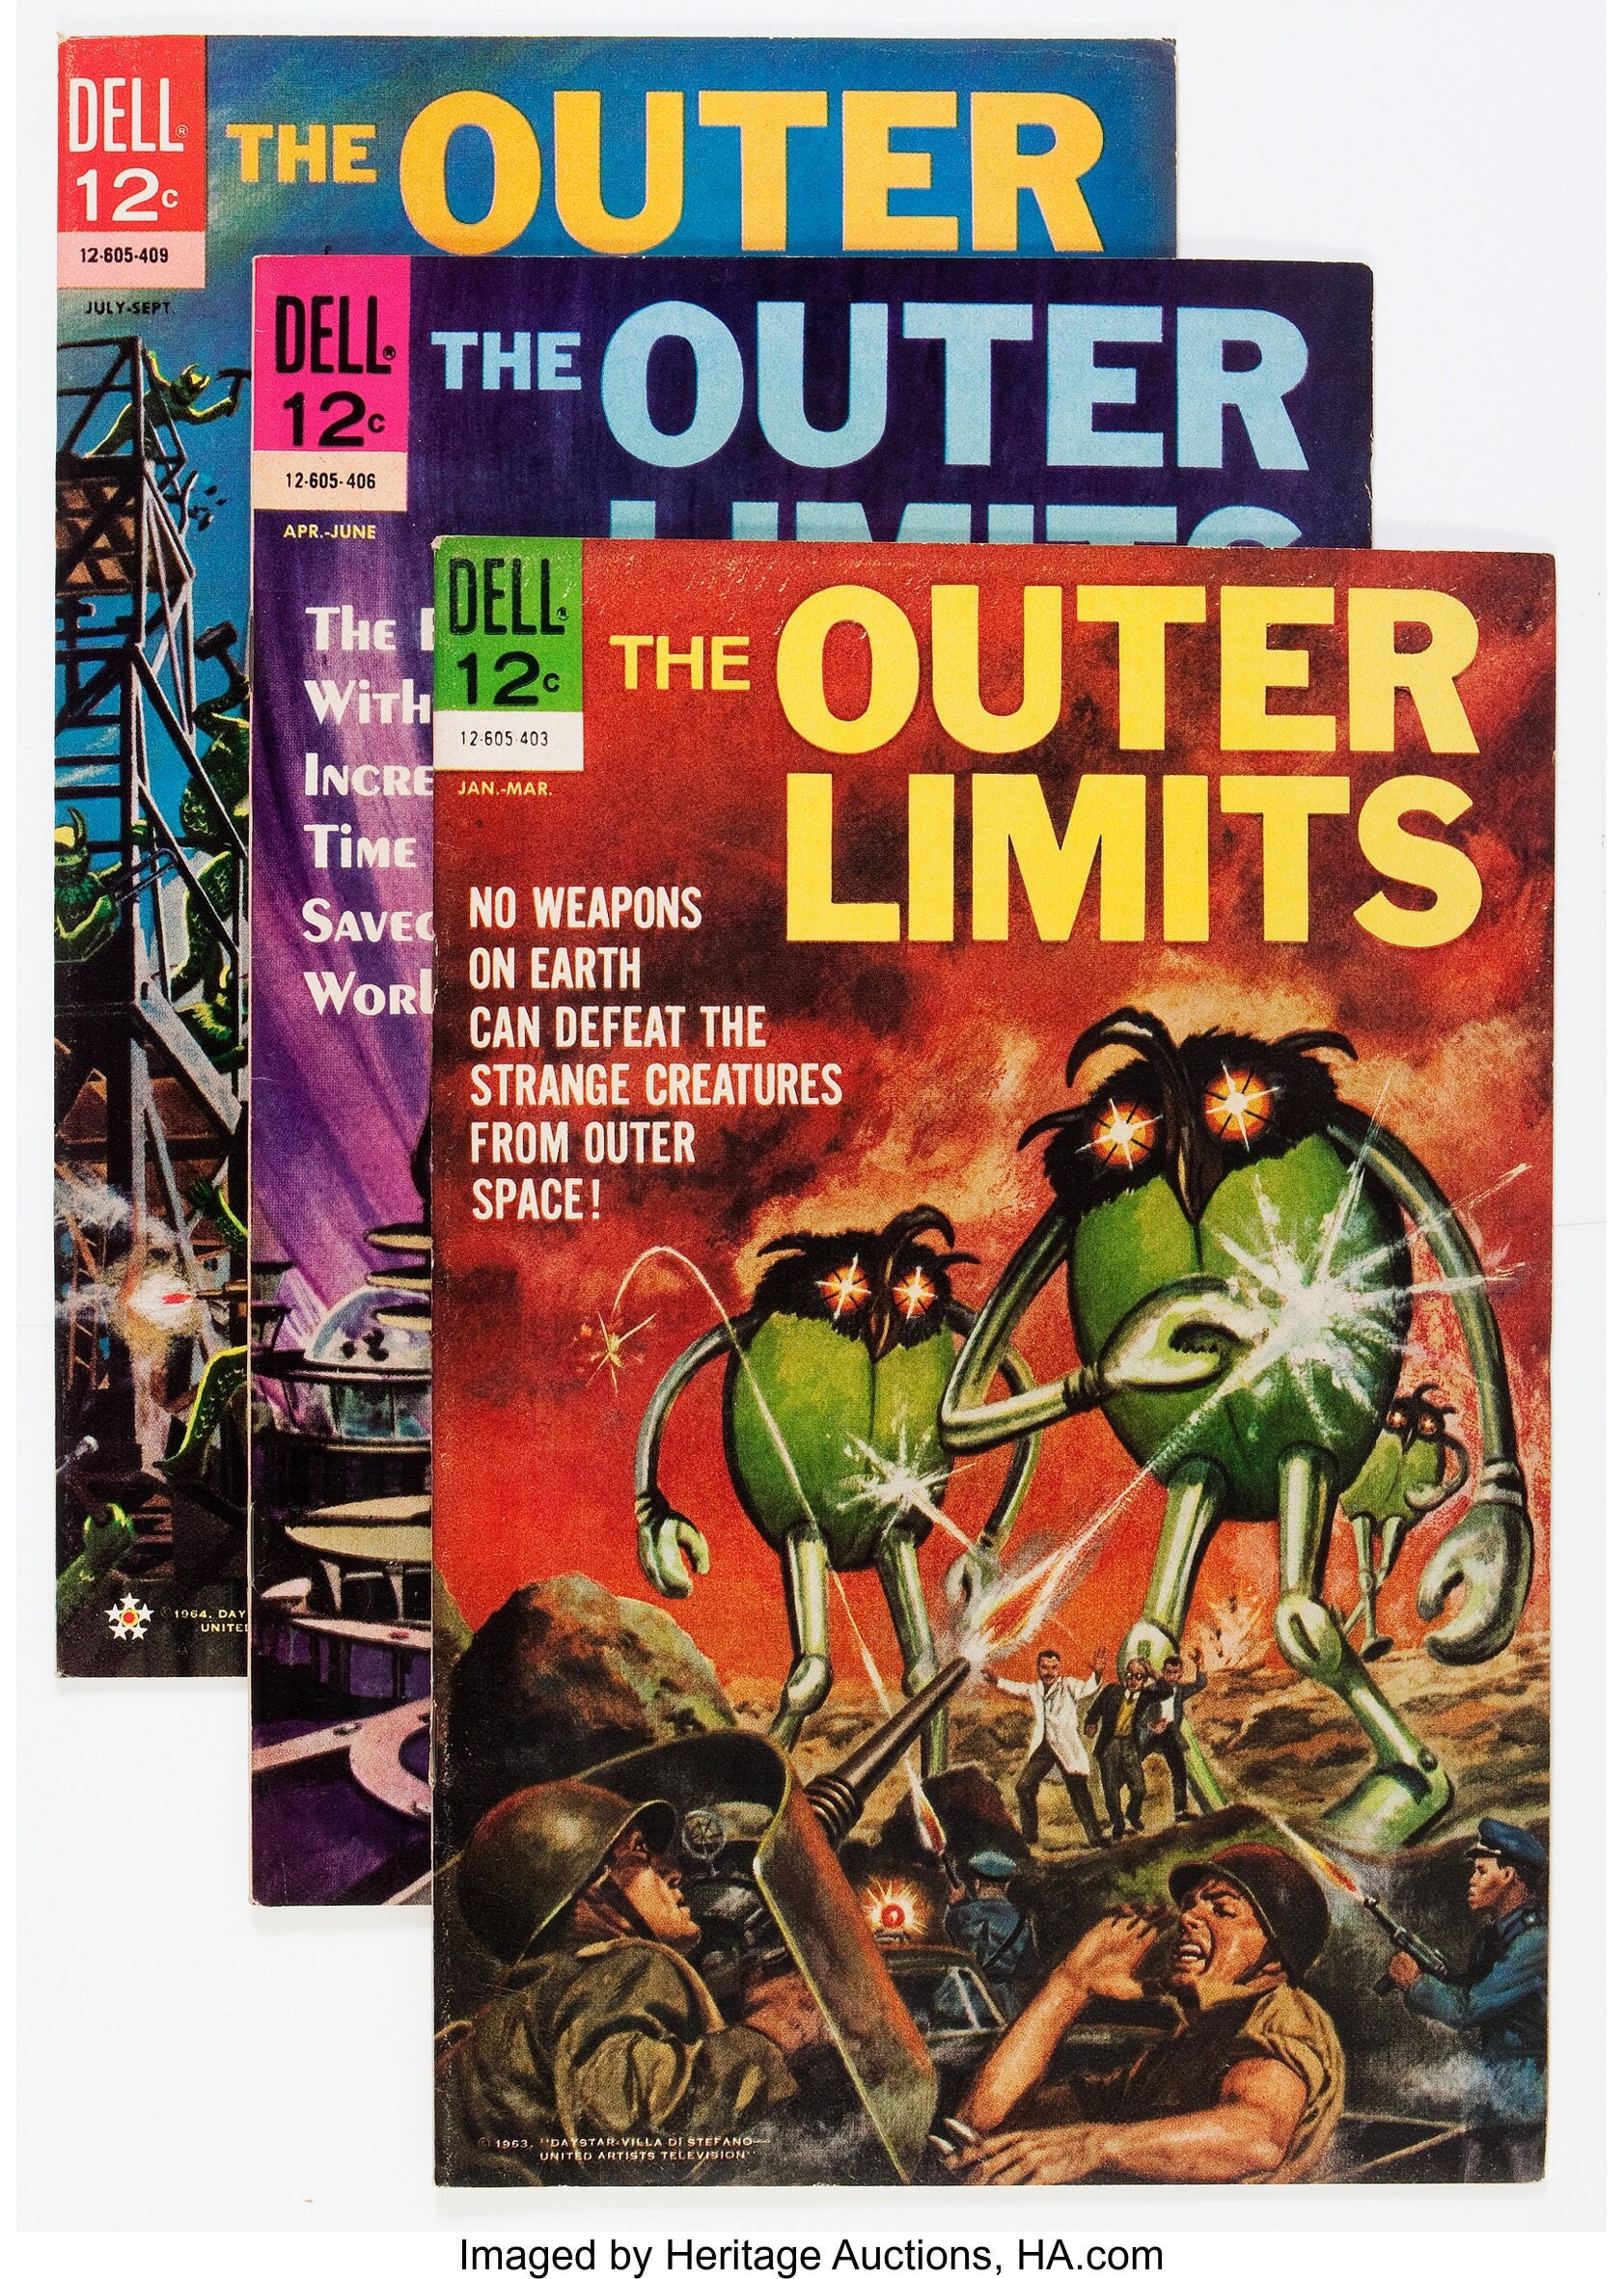 Outer limits comics